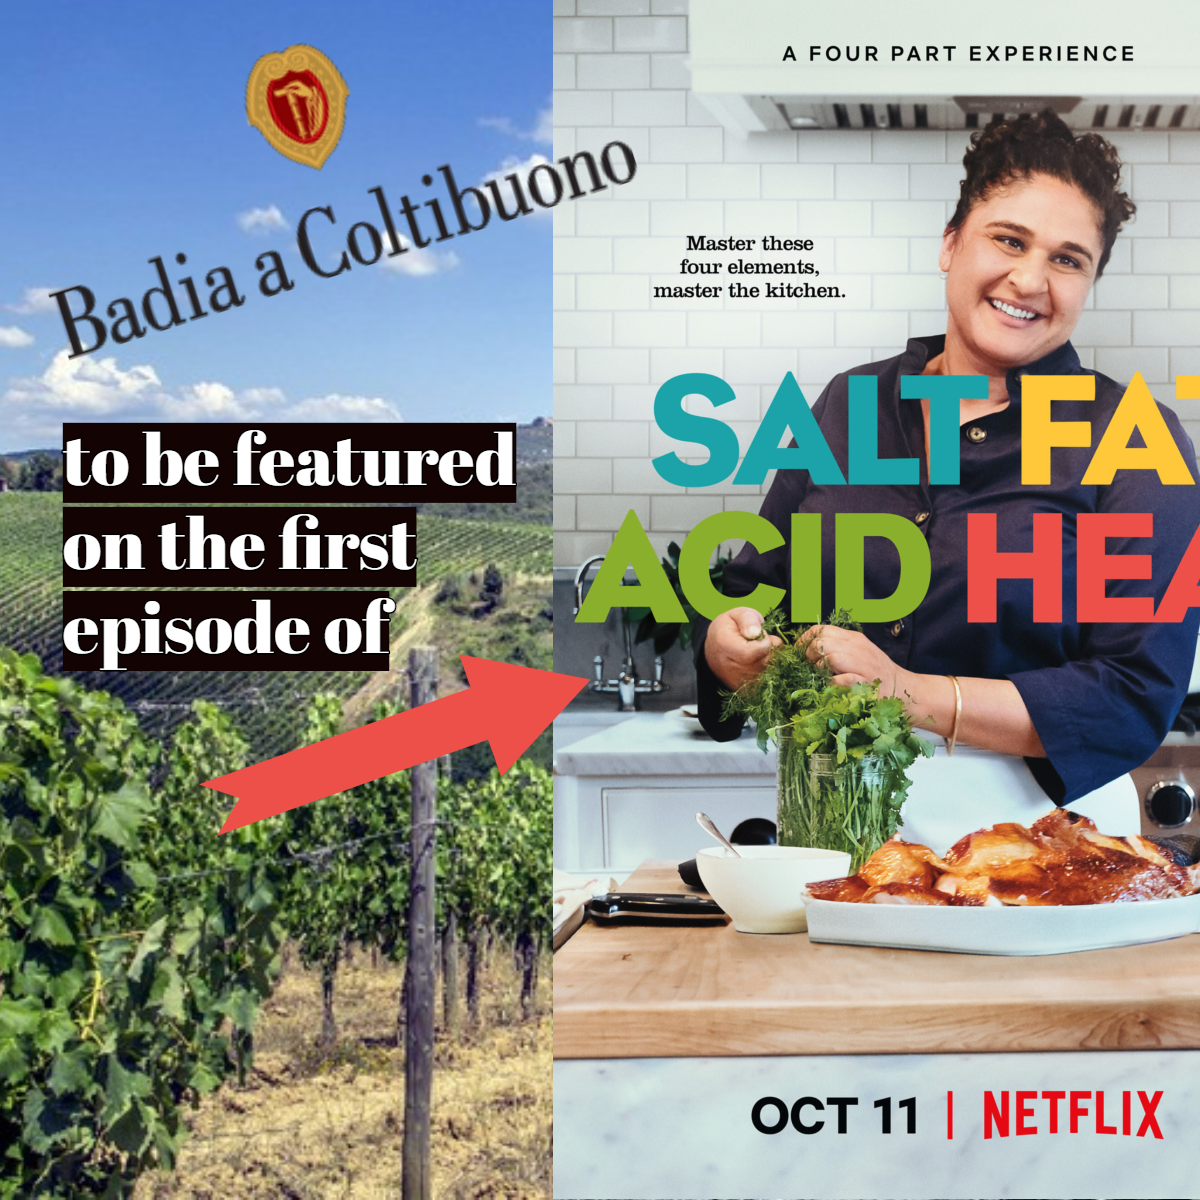 Badia a Coltibuono Featured On First Episode of Netflix's "Salt, Fat, Acid, Heat"